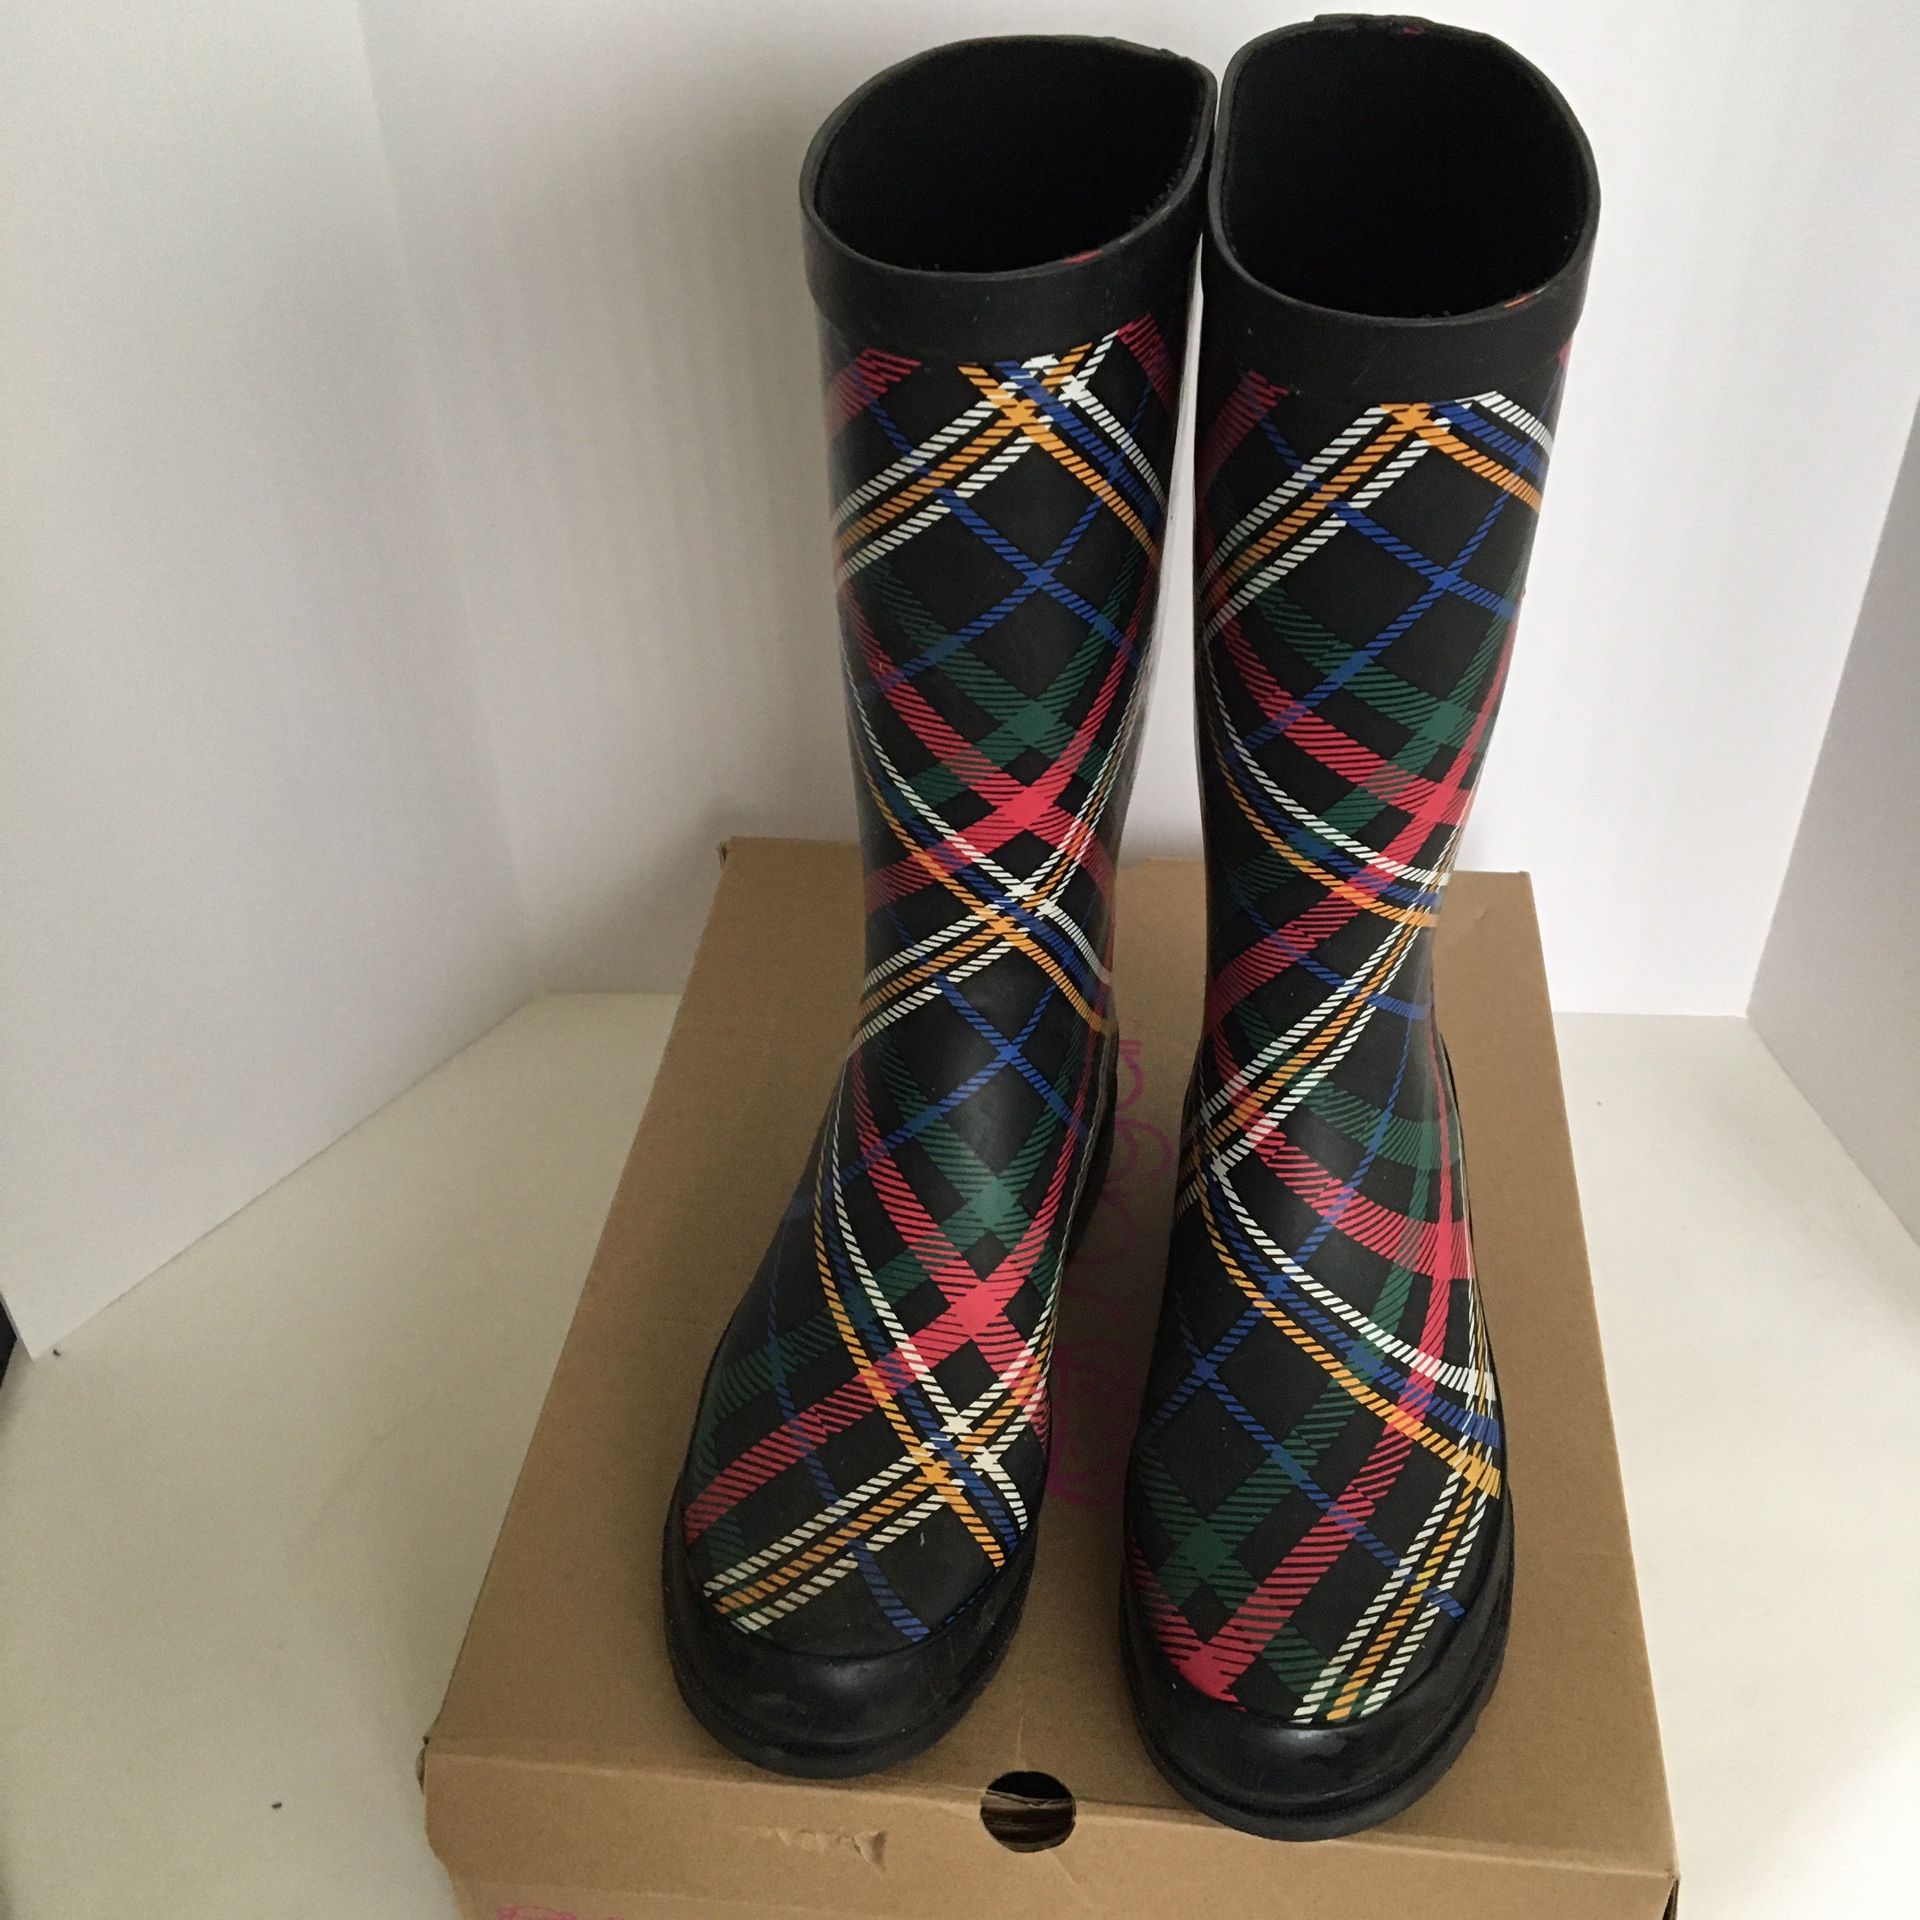   Sugar Black And Plaid Rain boots   Size 9  New